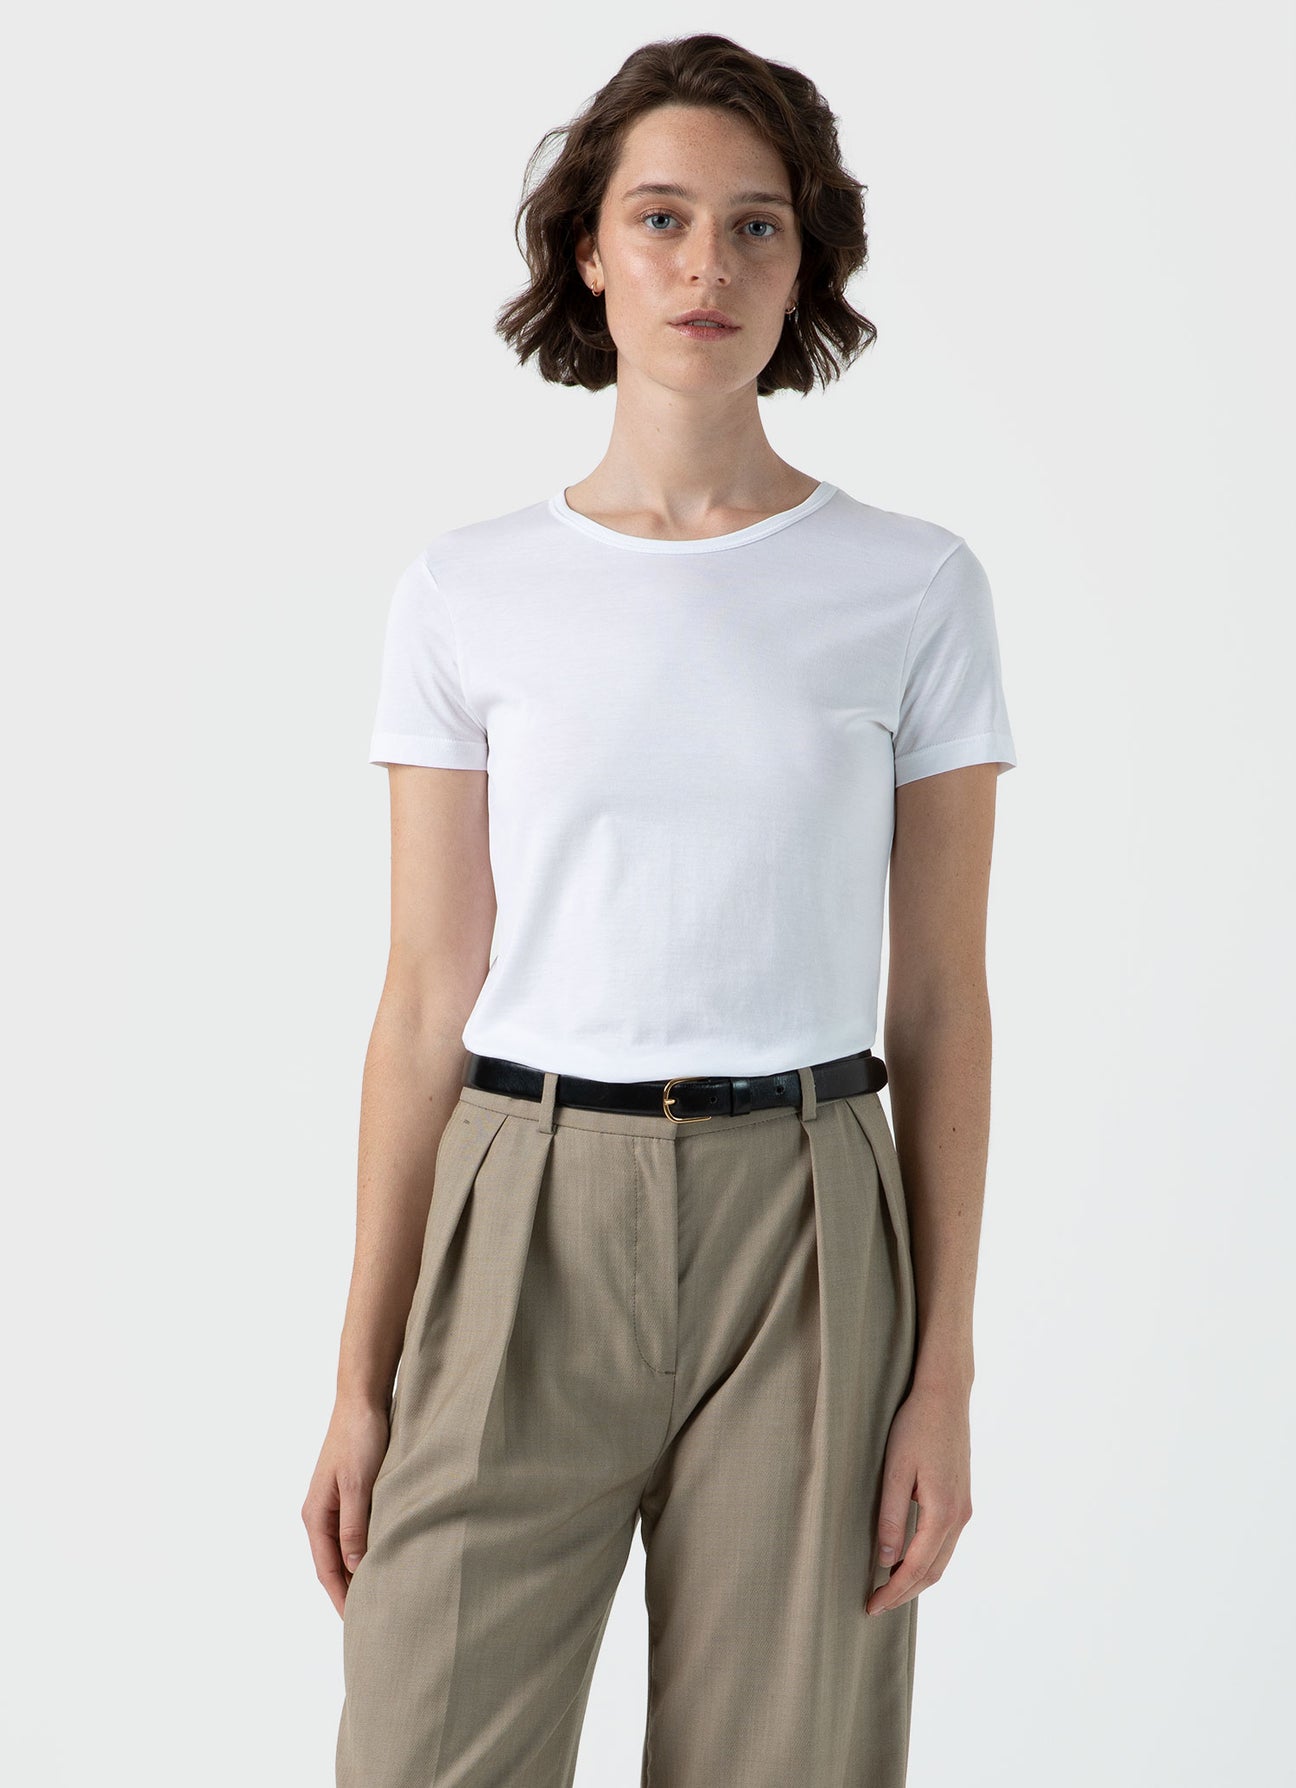 Women's Classic T-shirt in White | Sunspel